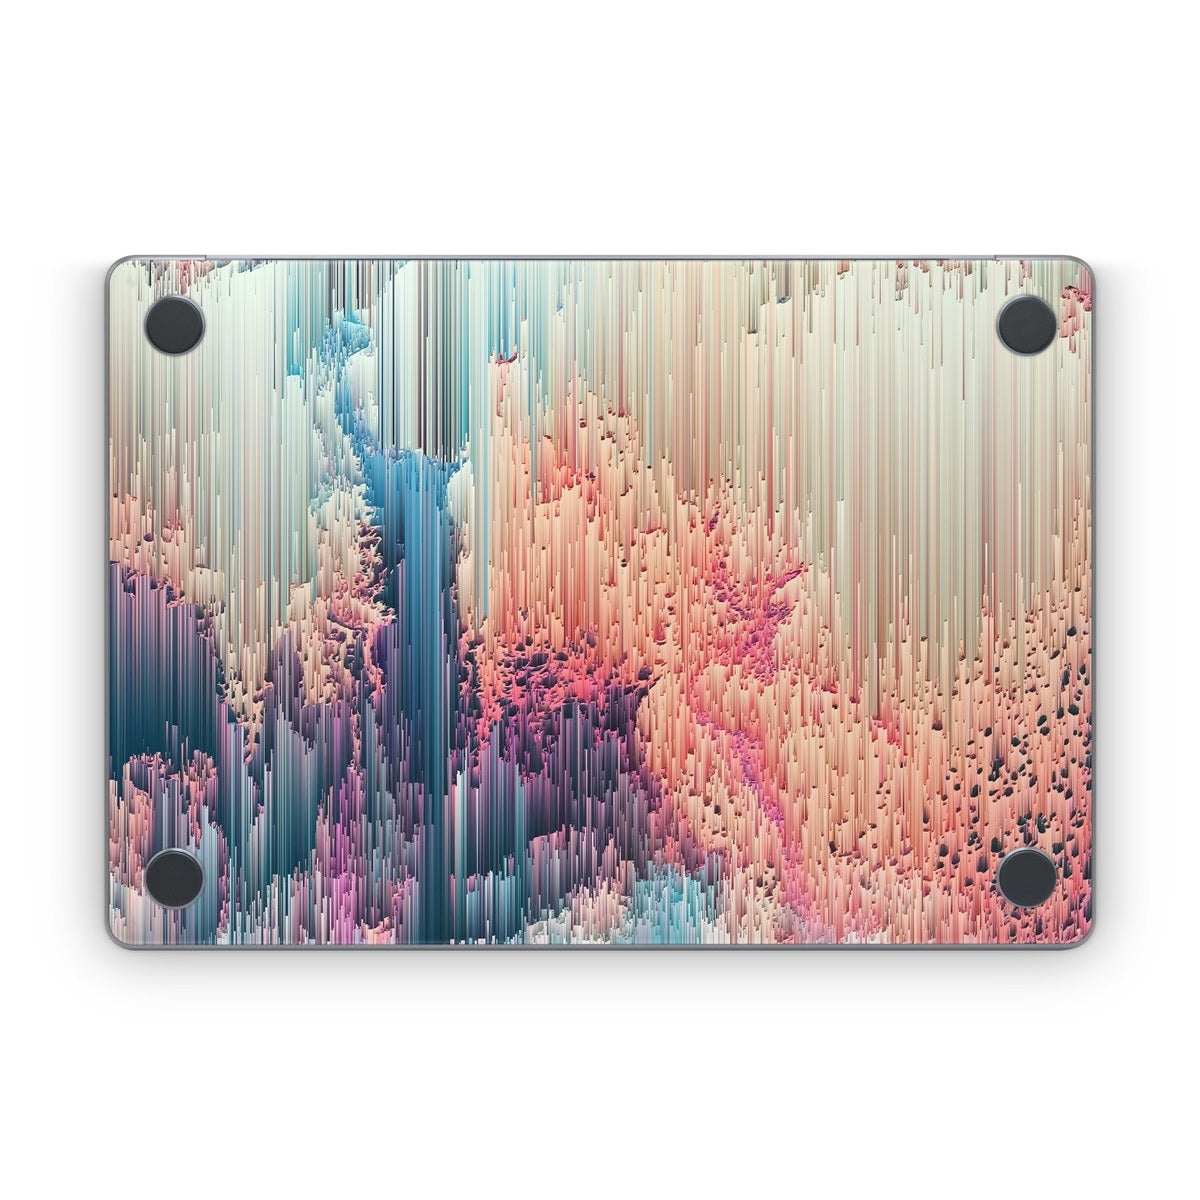 Fairyland - Apple MacBook Skin